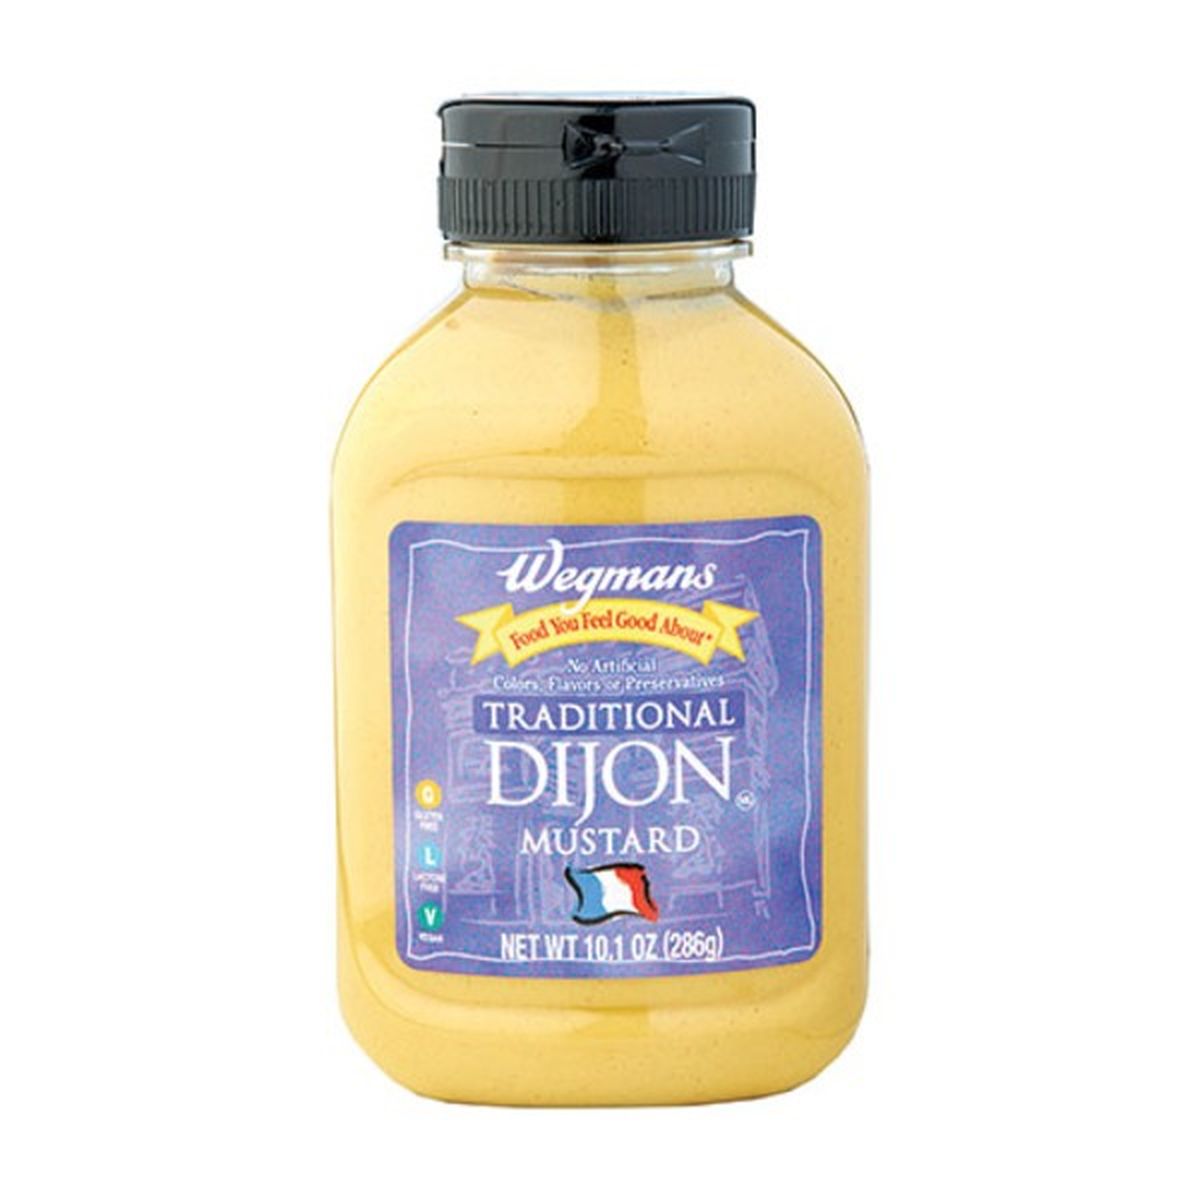 Calories in Wegmans Dijon Mustard